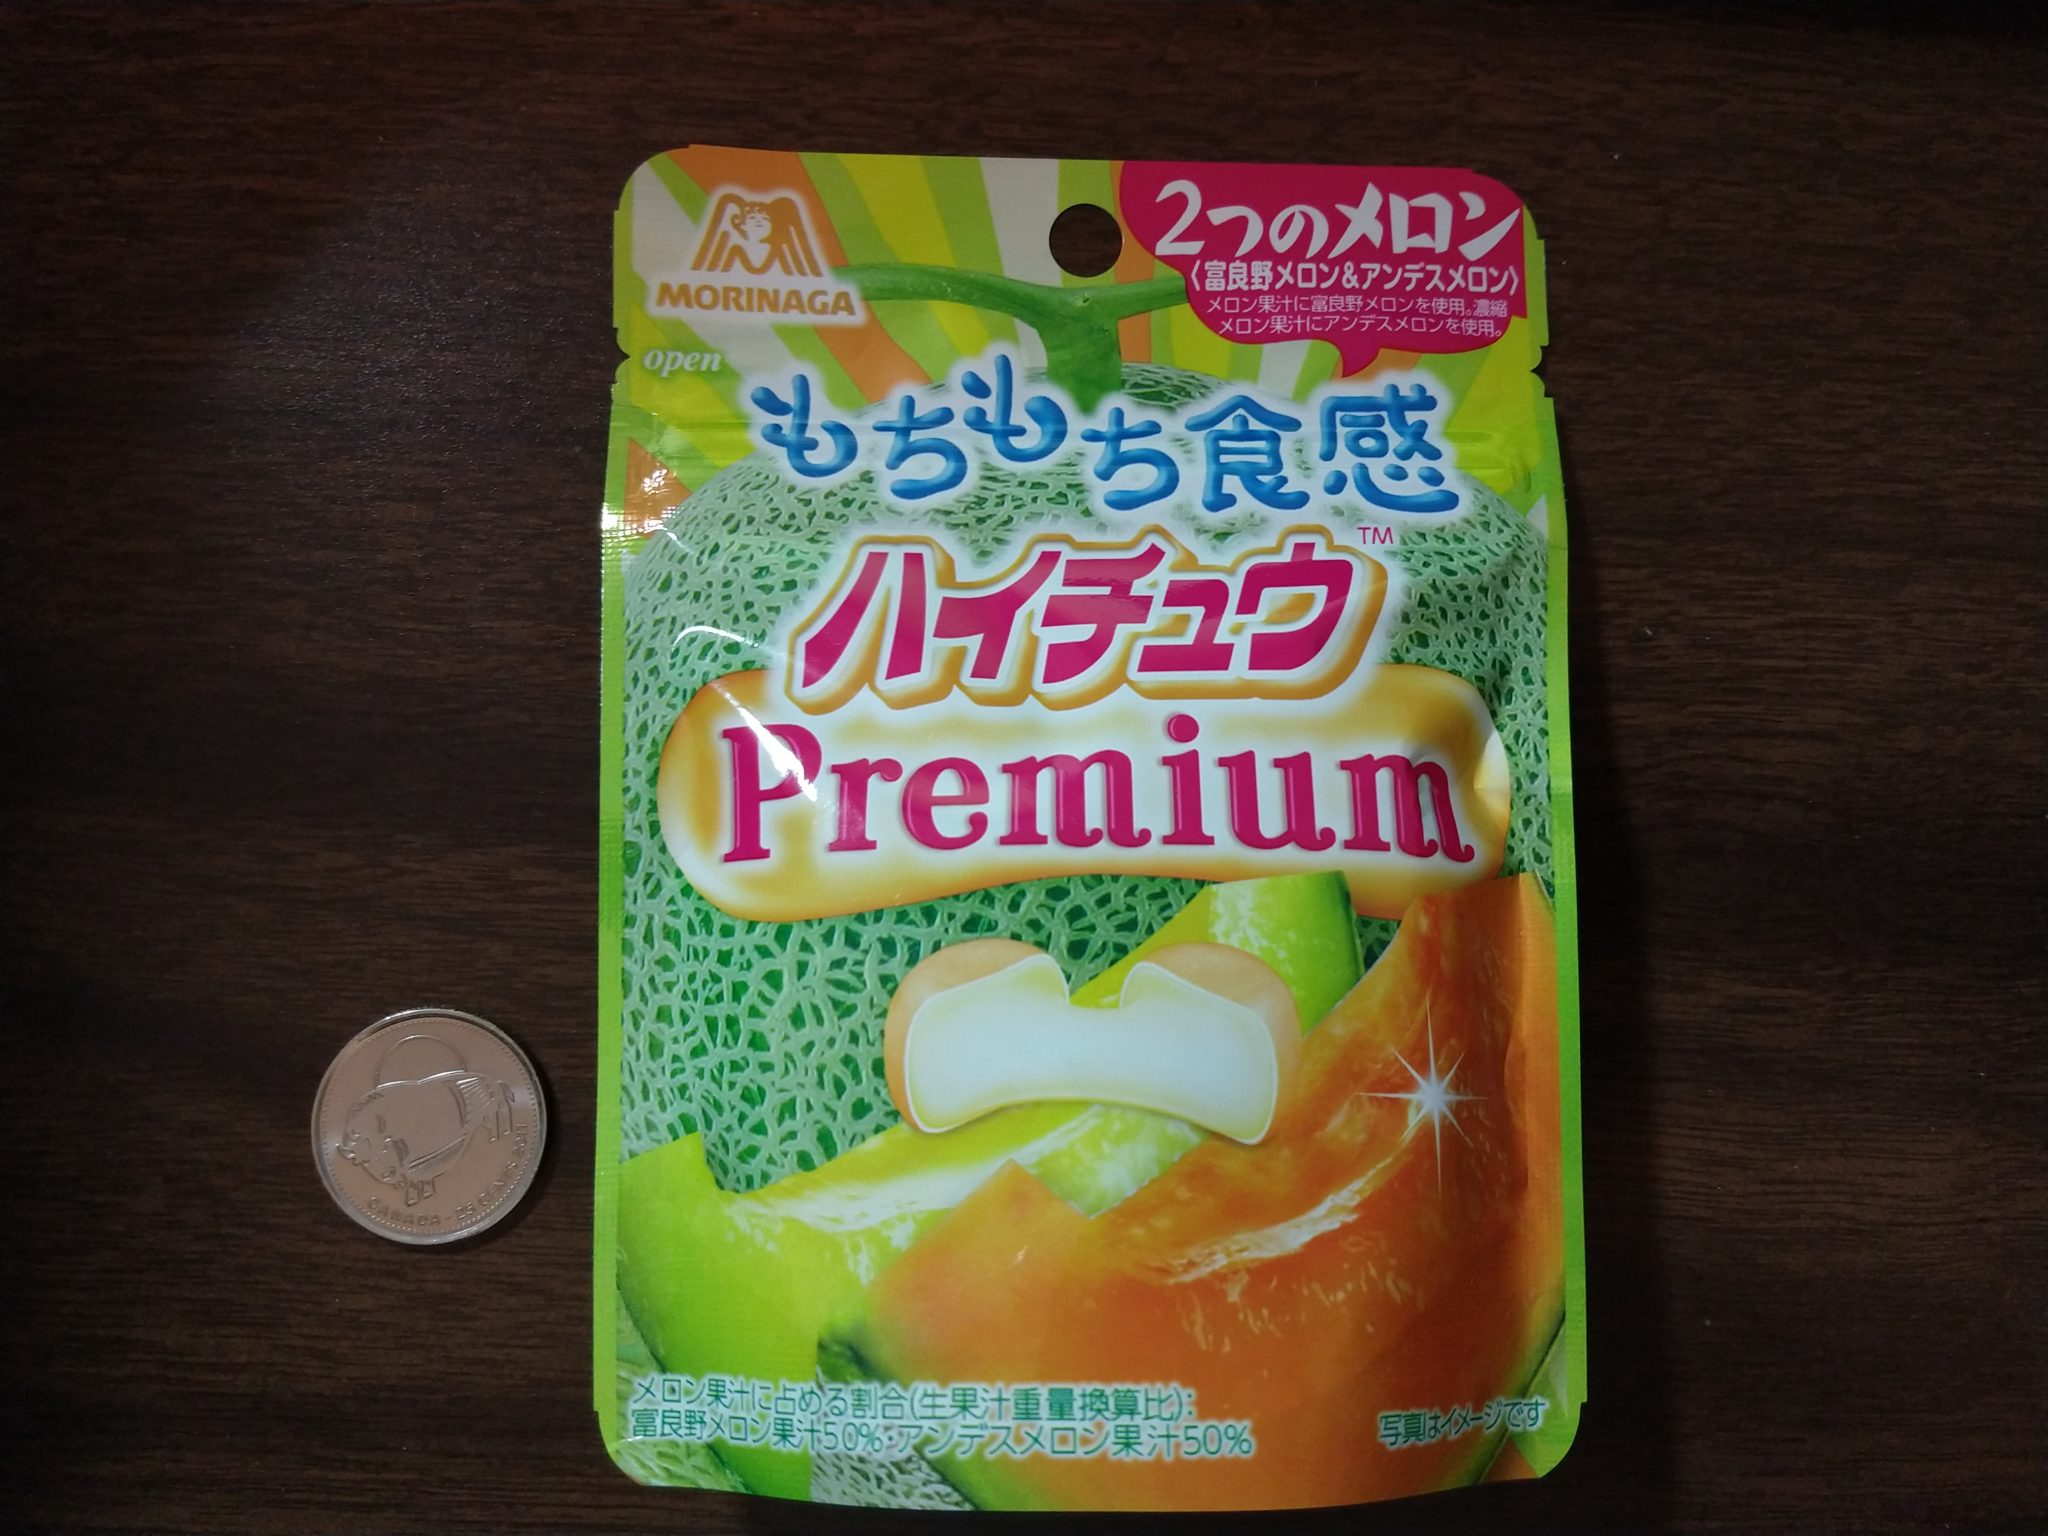 Hi-Chew Premium – Double Melon